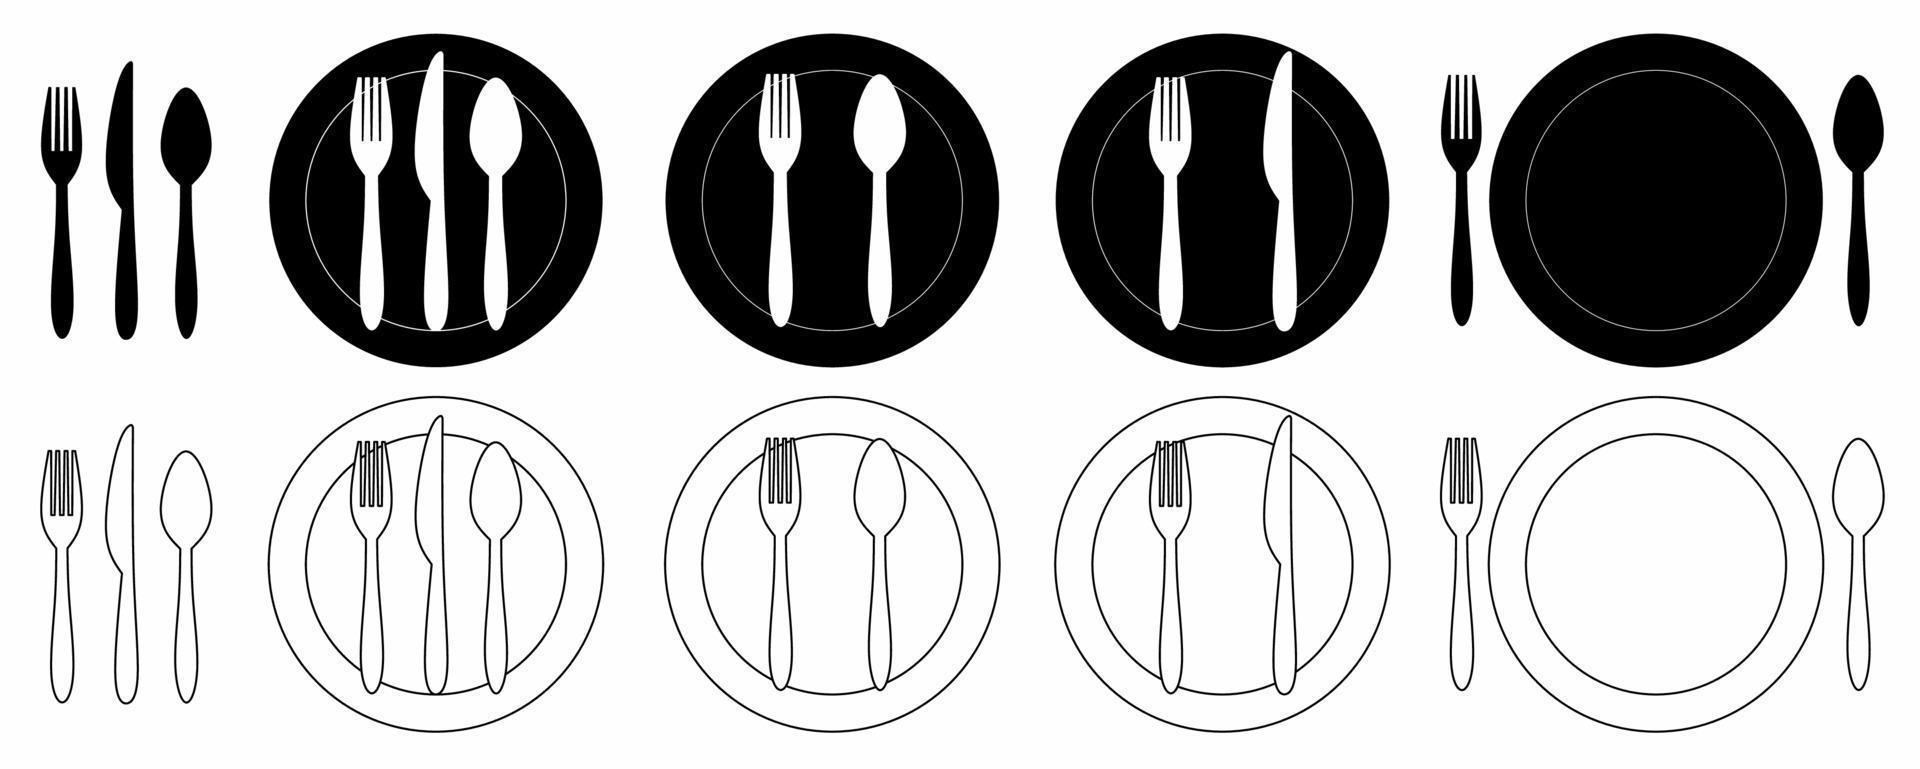 garfo colher faca prato talheres conjunto de ícones isolado no fundo branco vetor